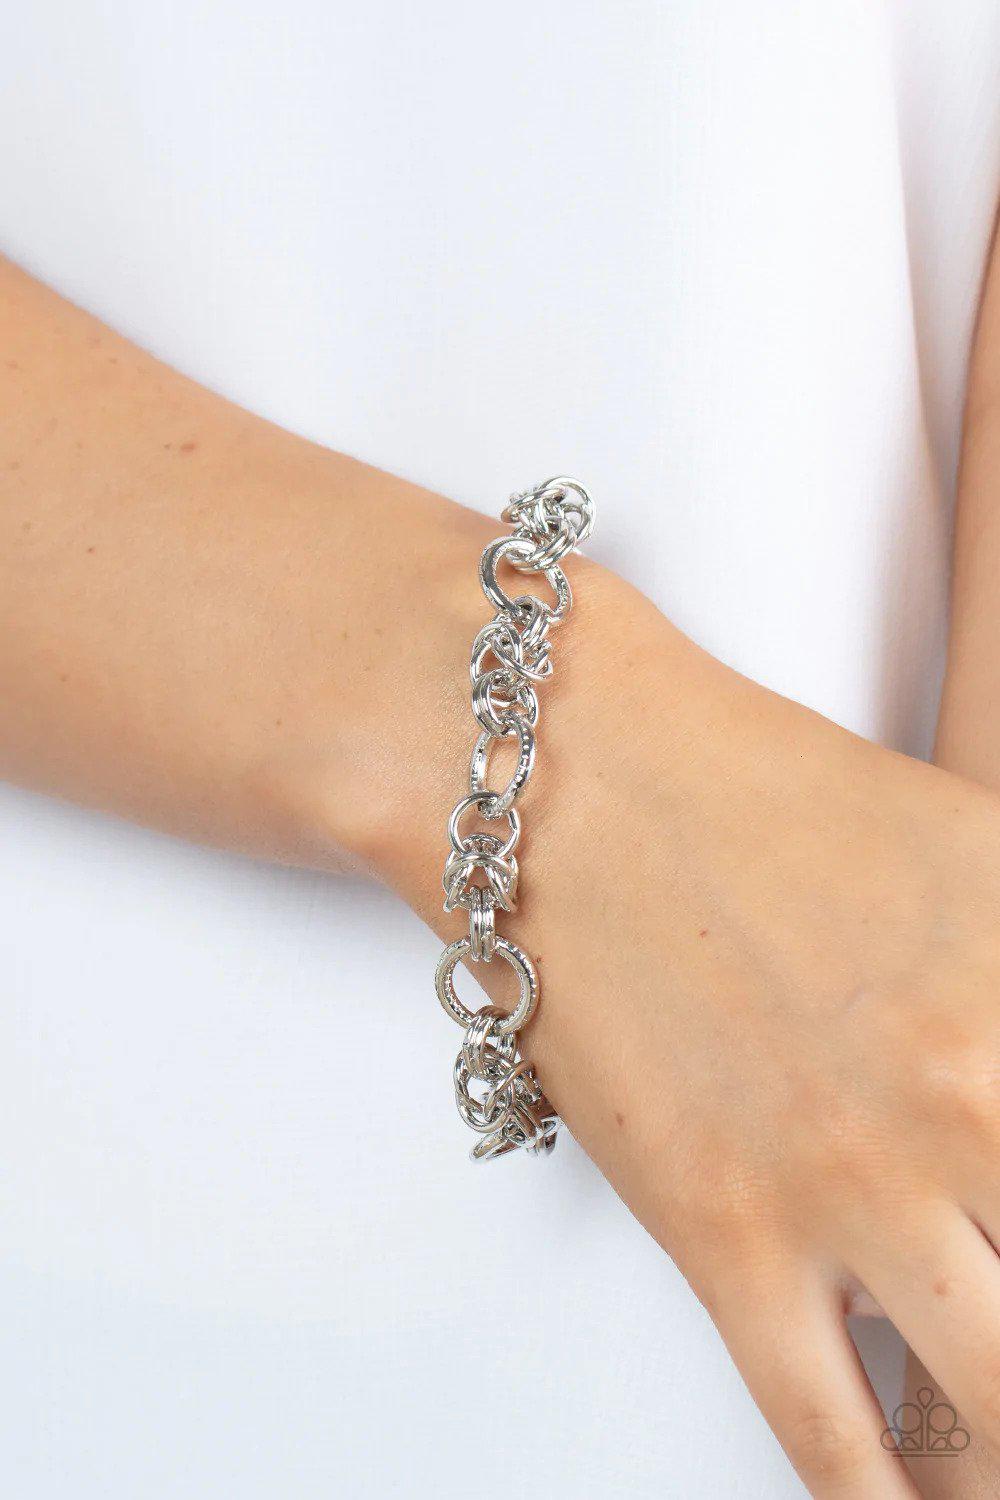 Big City Chic Silver Bracelet - Paparazzi Accessories- lightbox - CarasShop.com - $5 Jewelry by Cara Jewels